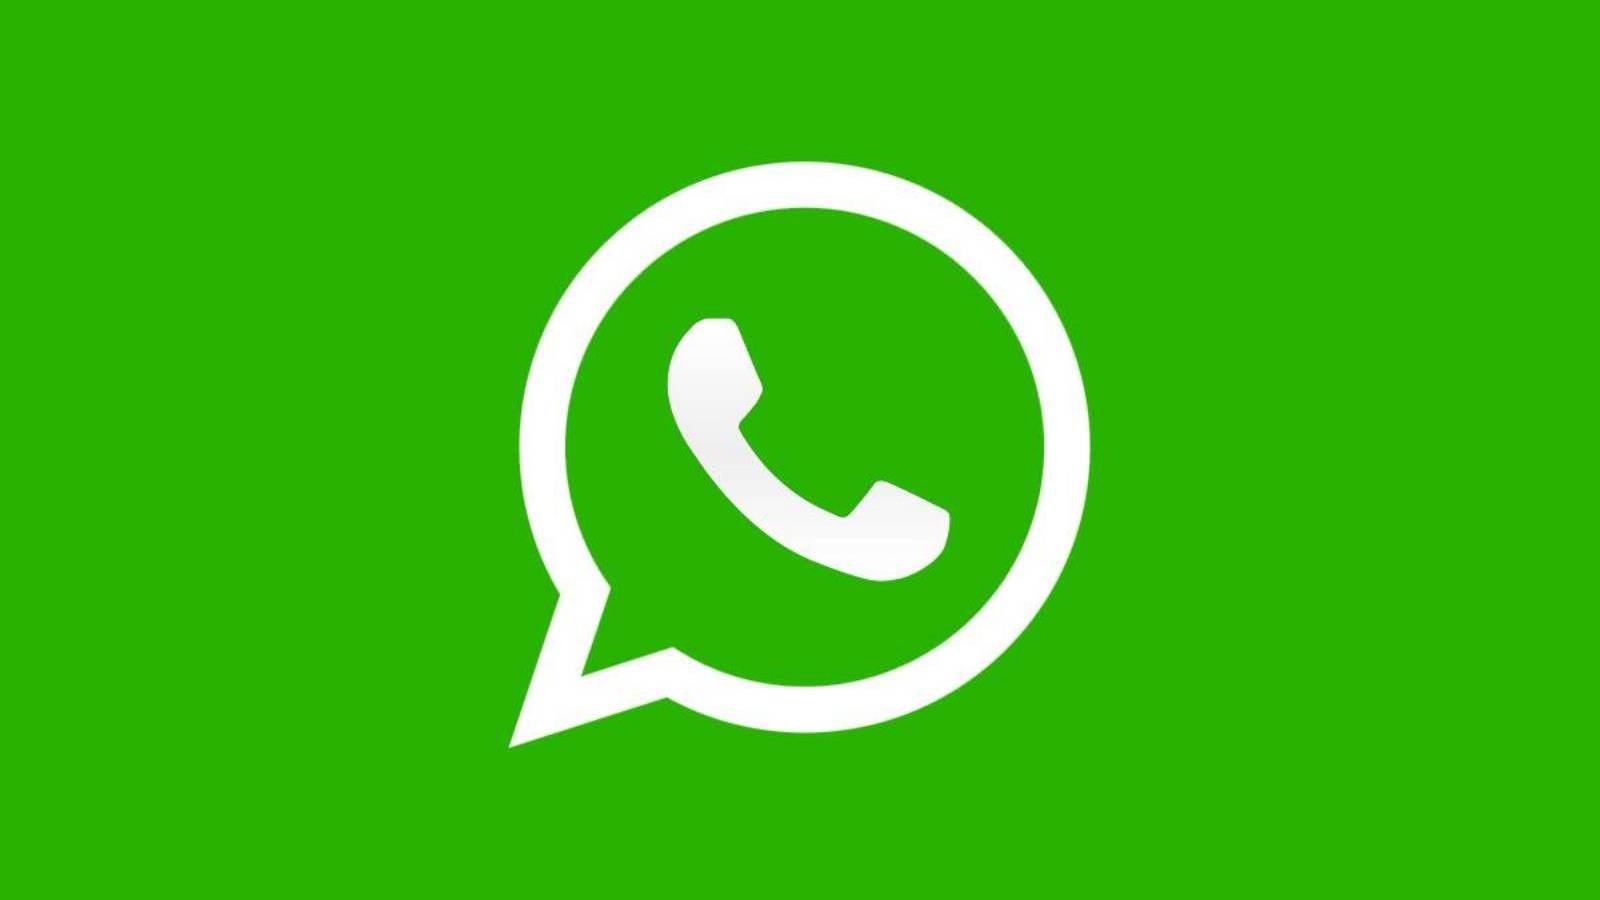 WhatsApp face Schimbari NEASTEPTATE Utilizatori Companii